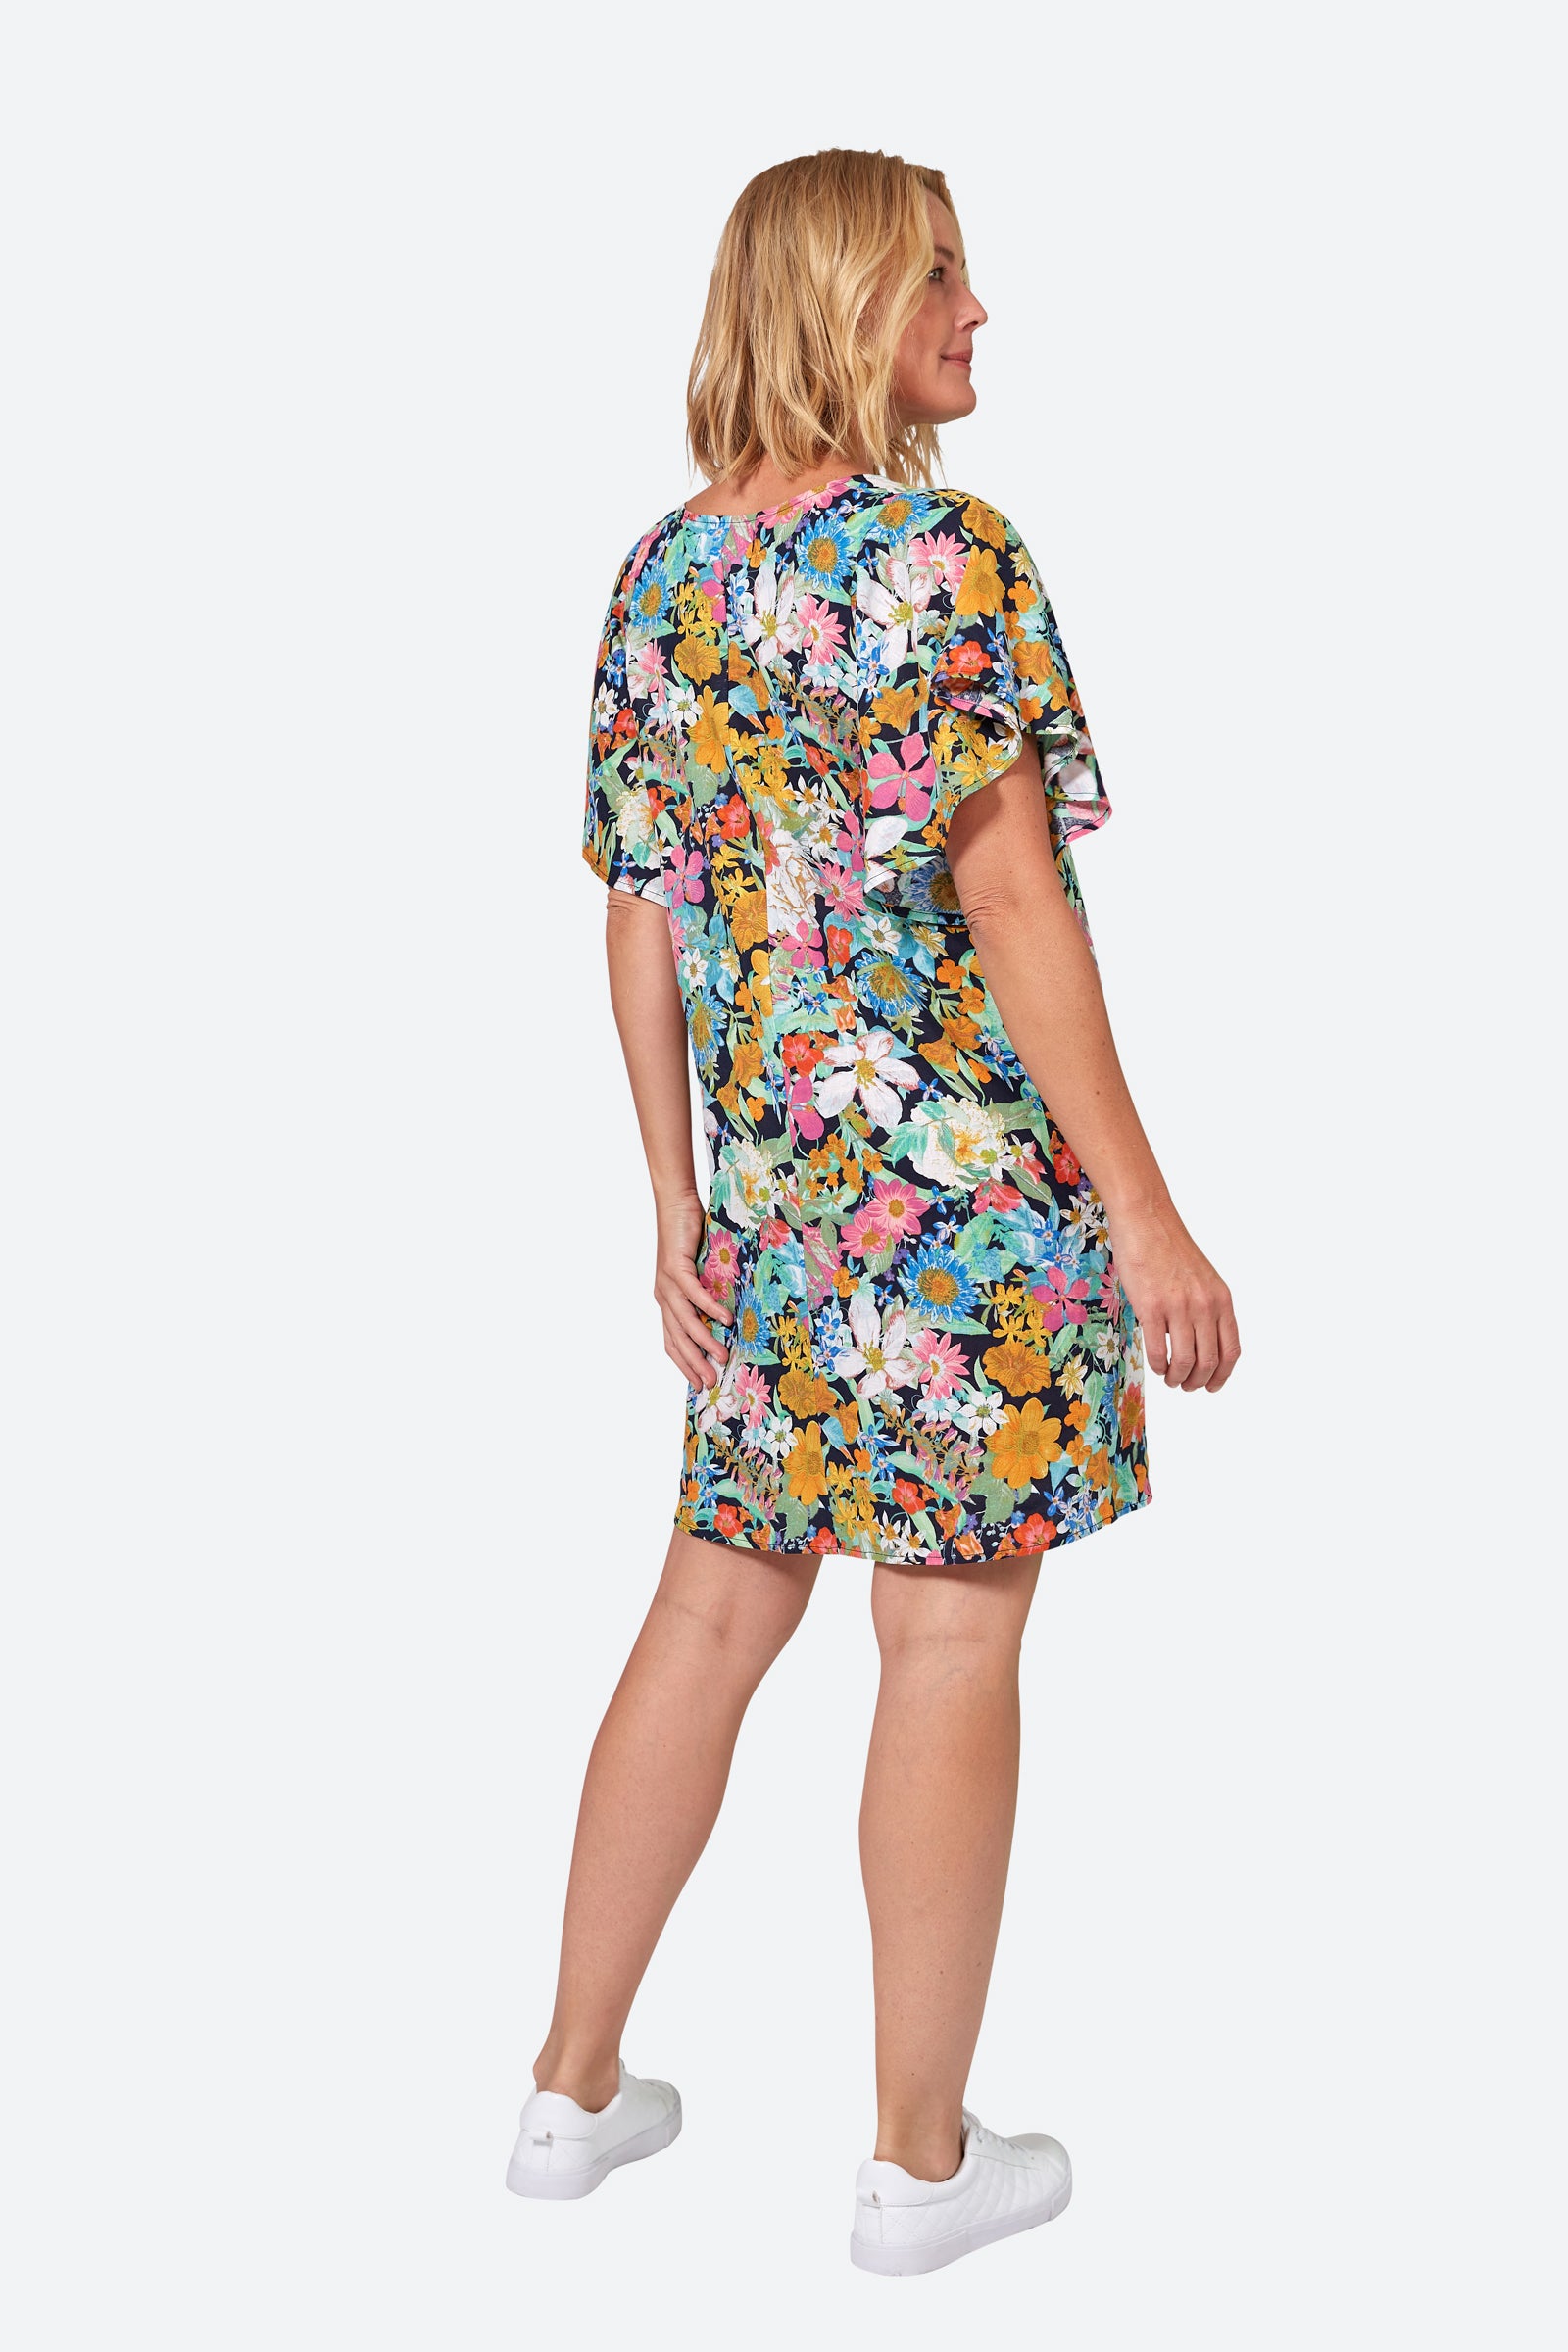 Verve Dress - Navy Flourish - eb&ive Clothing - Dress Mid Linen